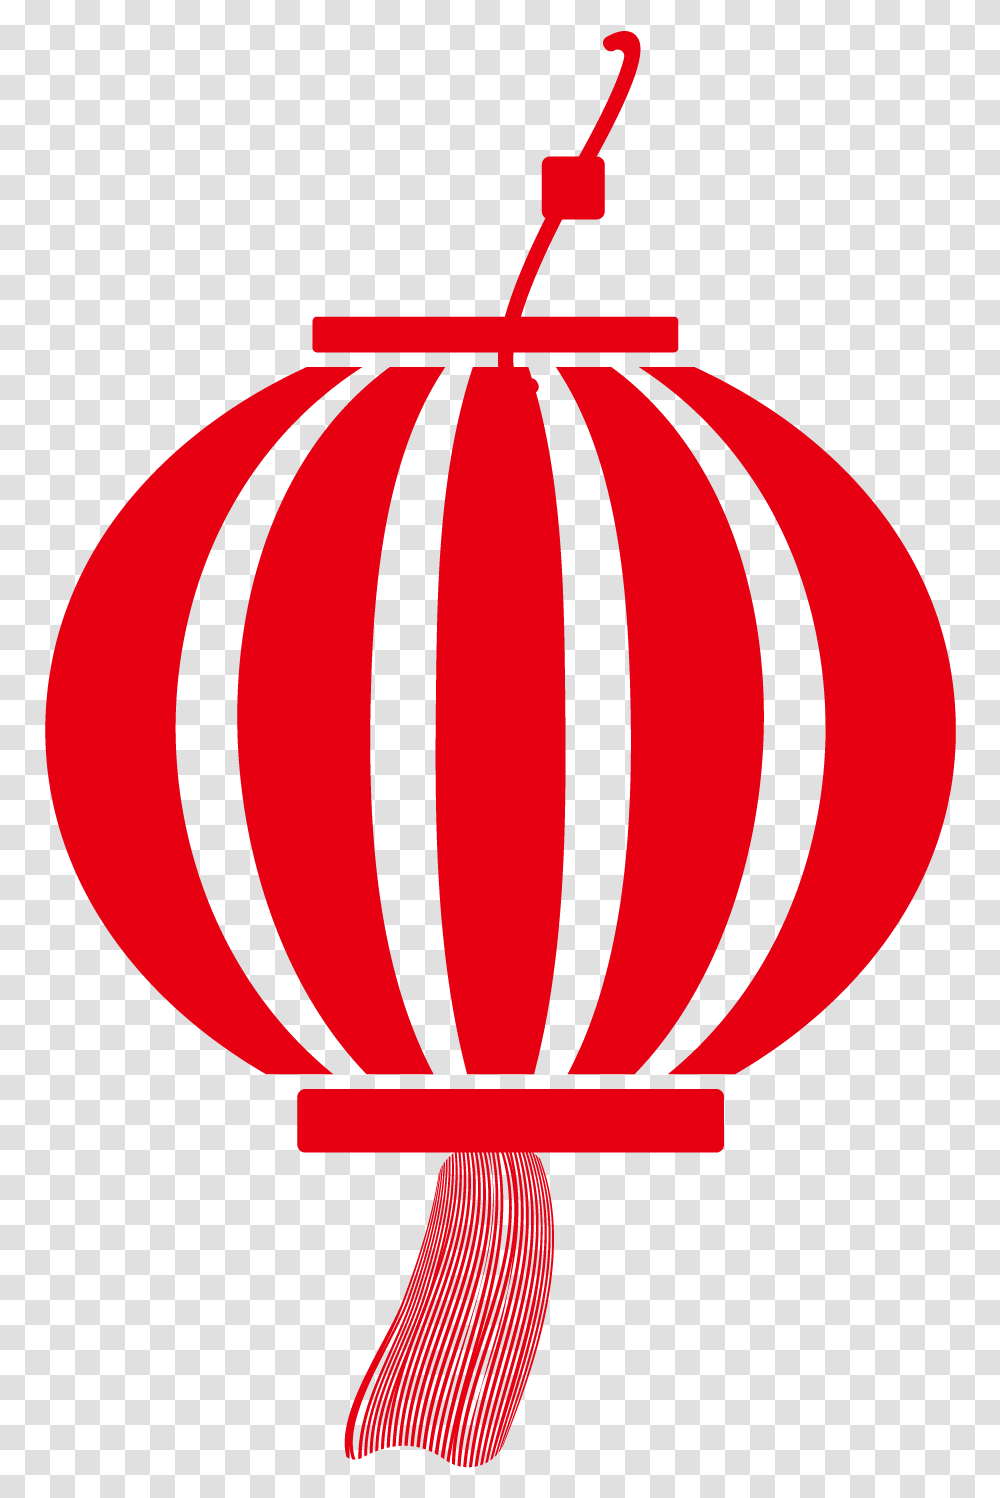 Red Festive Lantern Original And Vector Image, Aircraft, Vehicle, Transportation, Hot Air Balloon Transparent Png